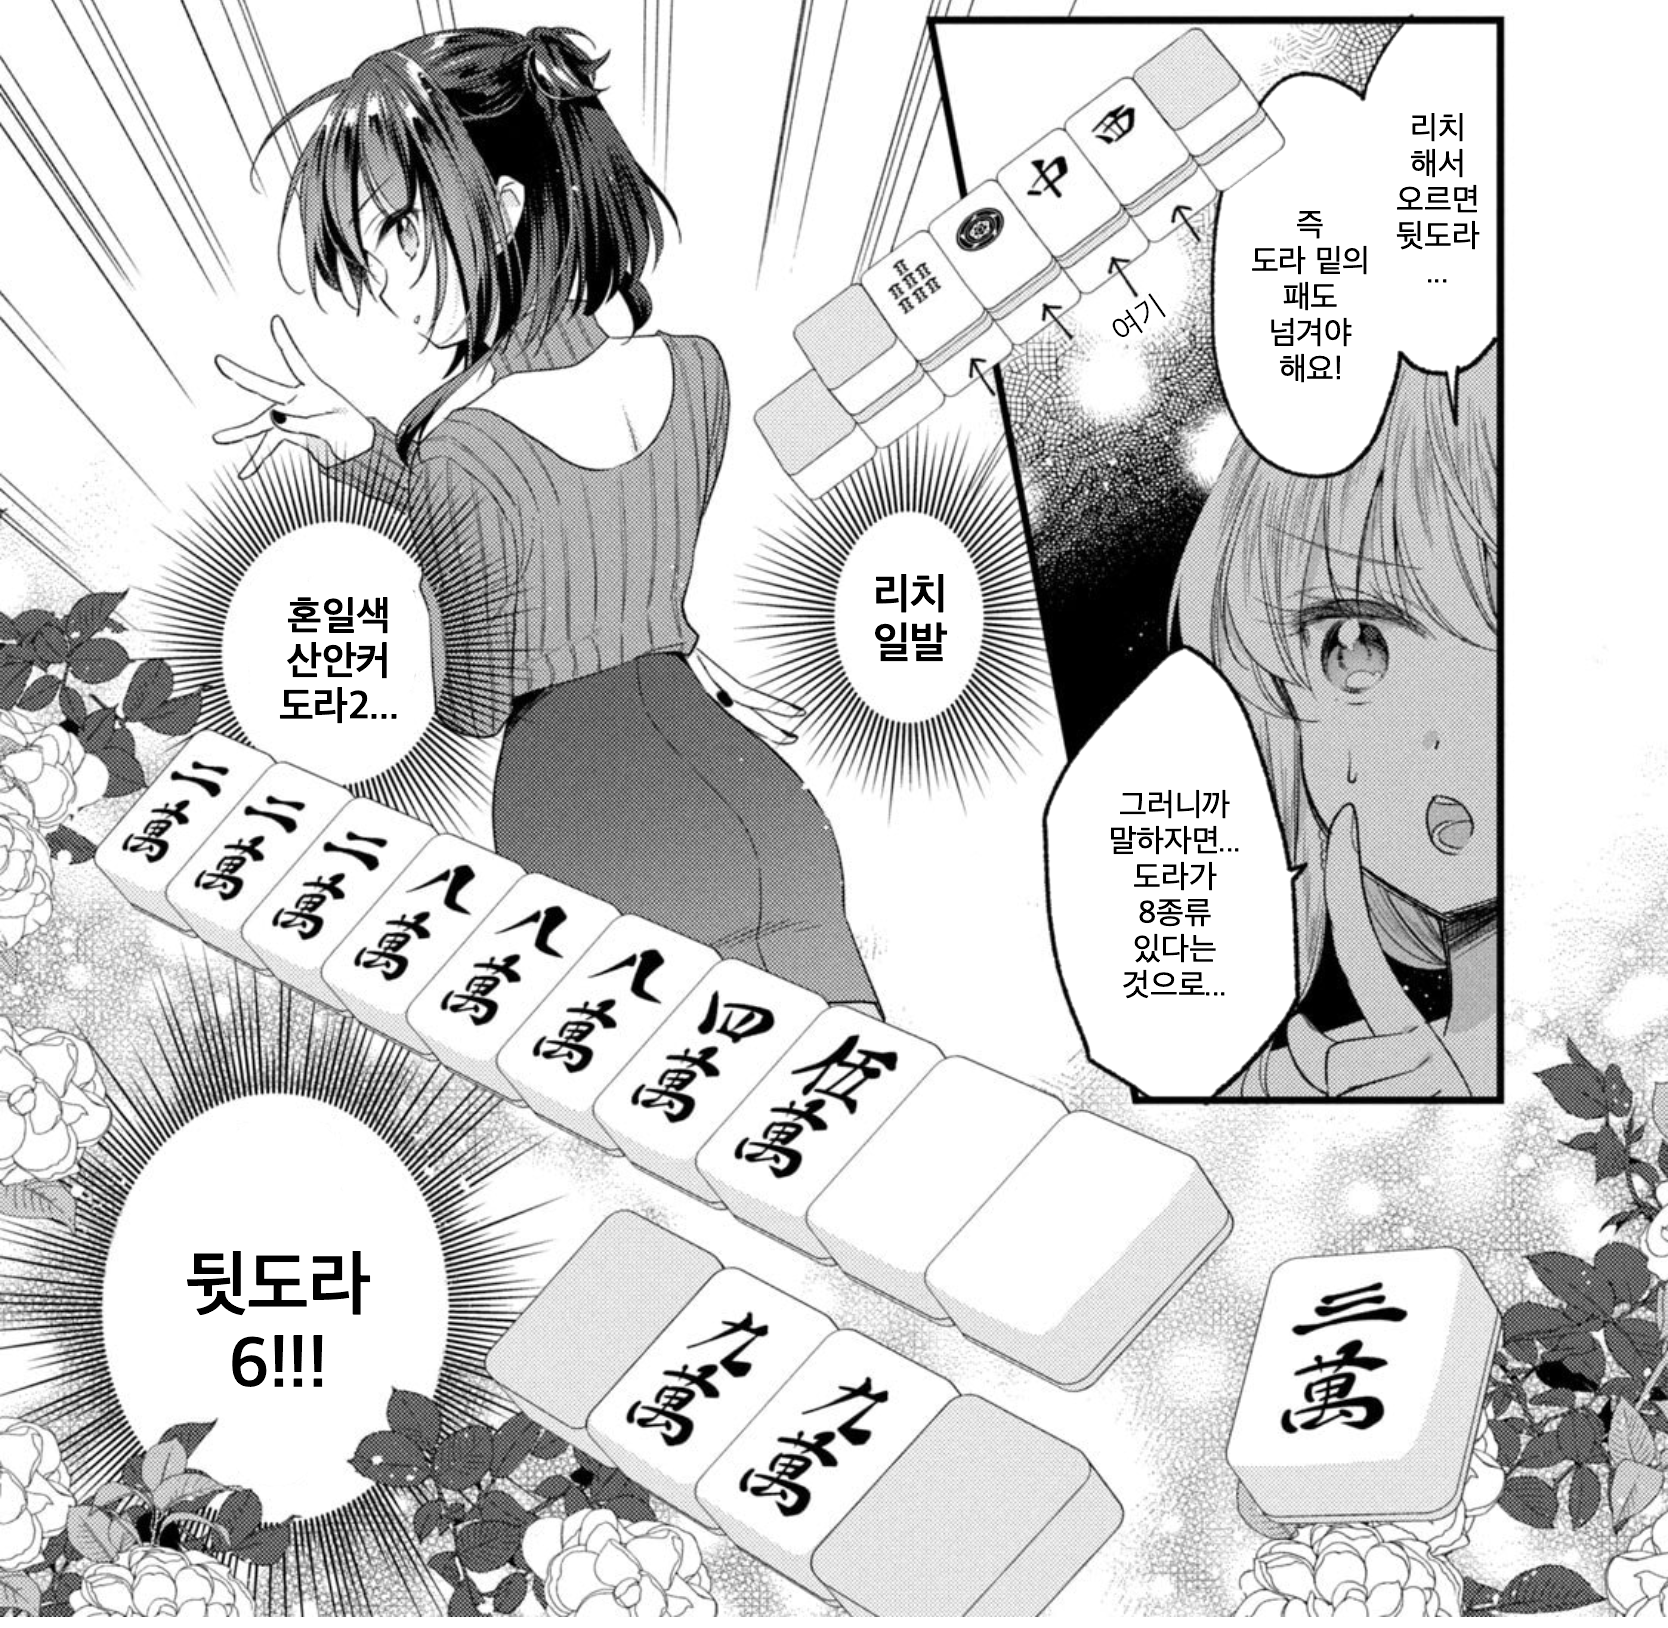 Mahjong Stuff in Pon No Michi Episode 12 (Final) - Janta-kun's Minor Illness